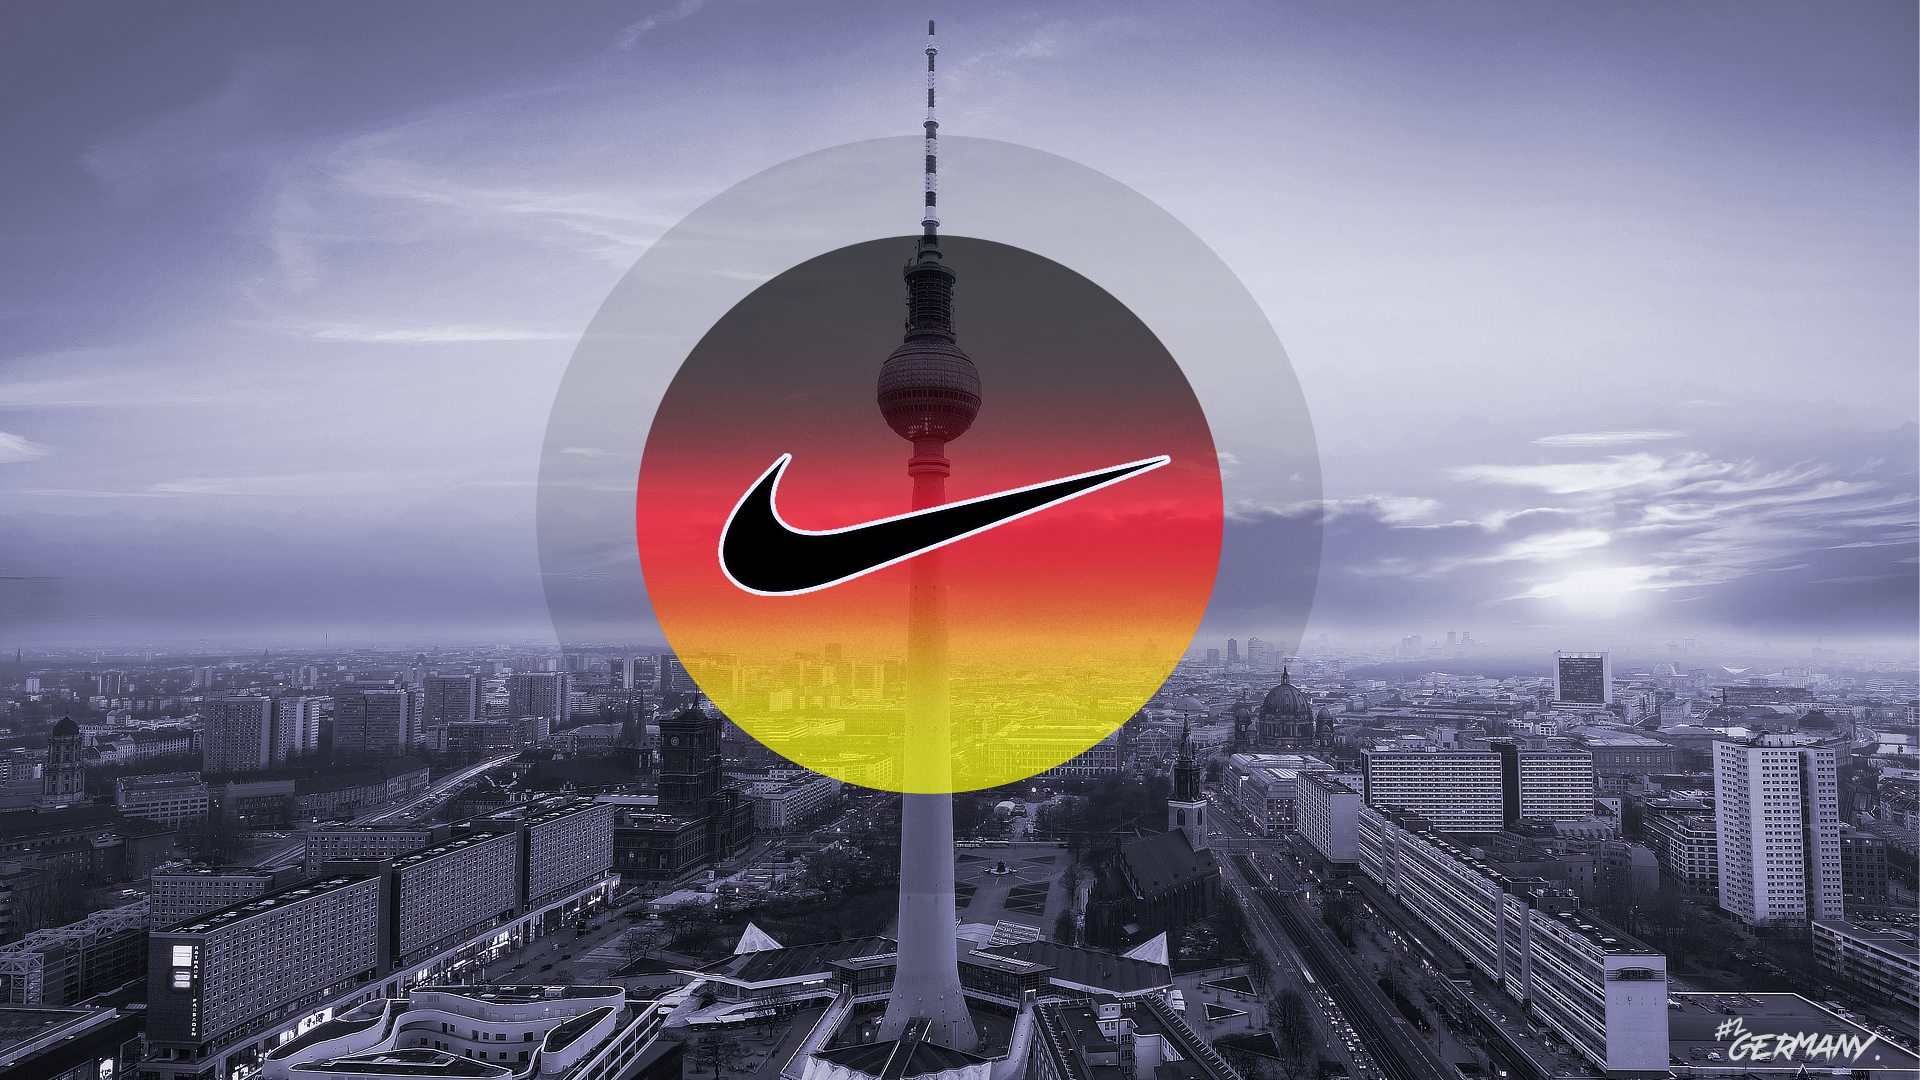 General 1920x1080 Berlin Germany tower city skyline Nike logo Berlin TV Tower brand